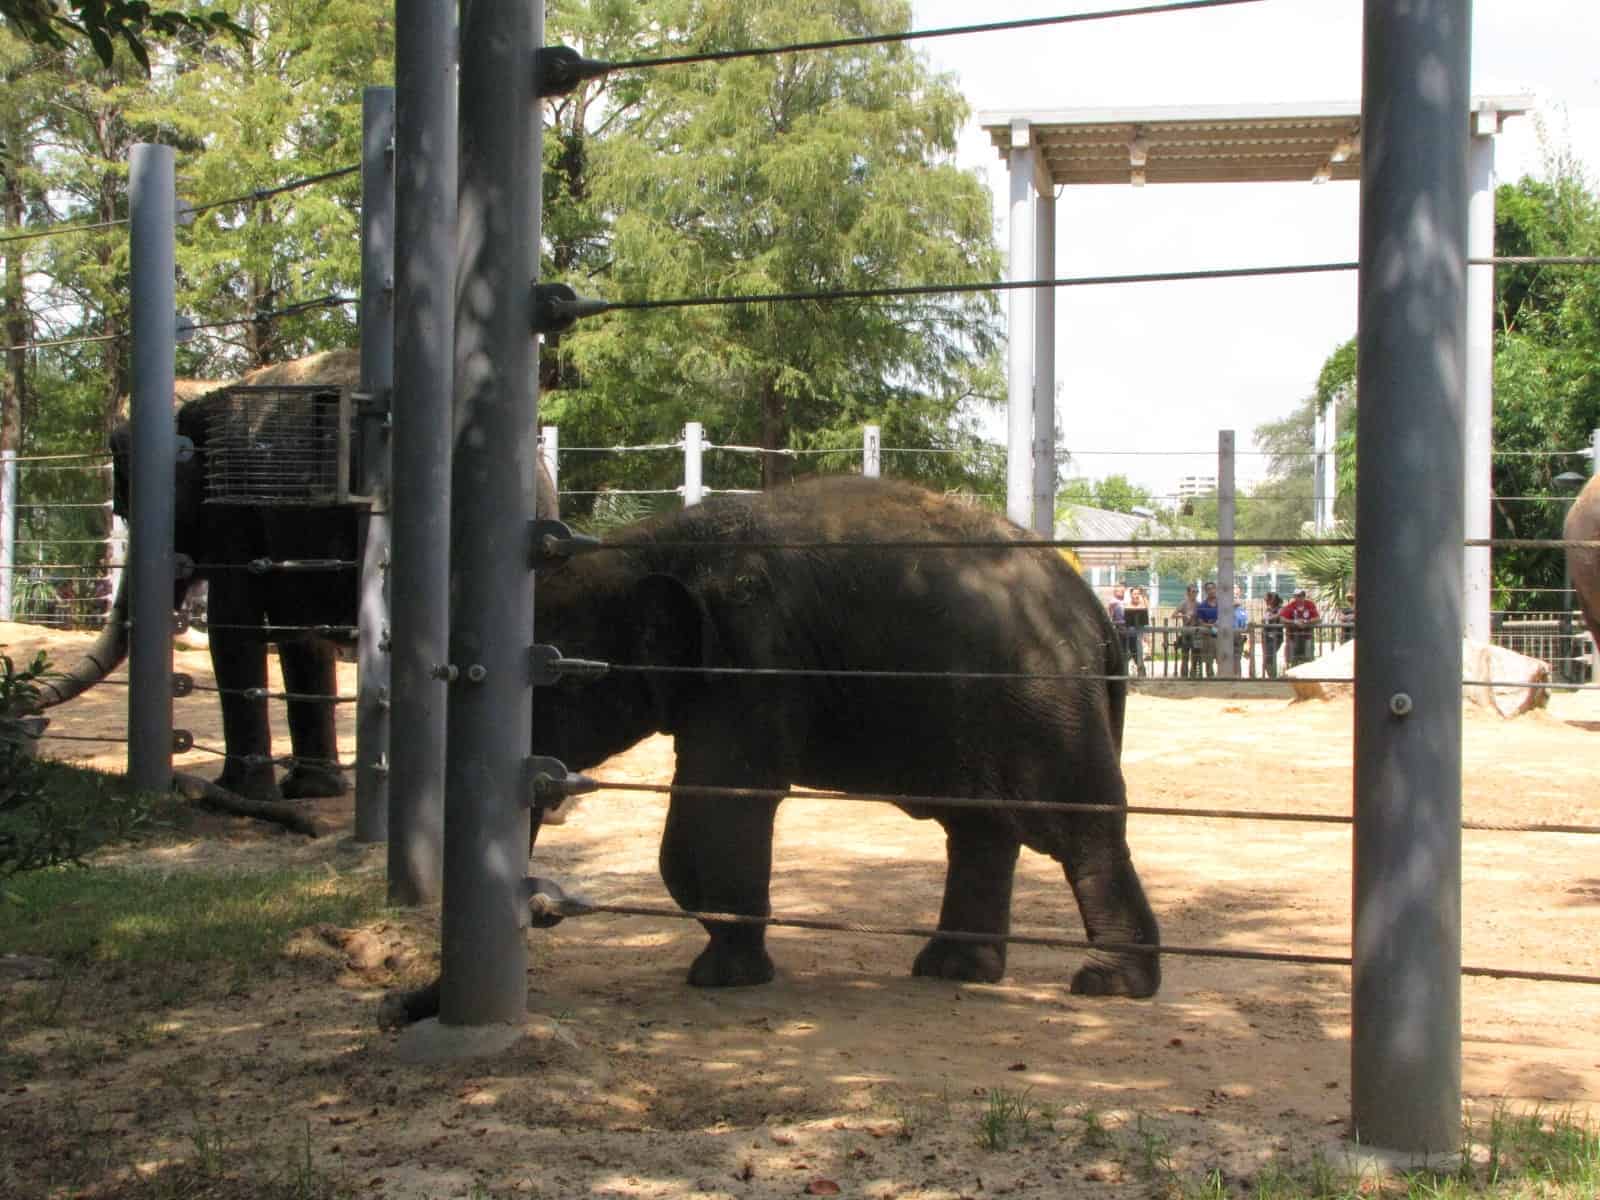 Asian Elephant at Houston Zoo in Houston TX